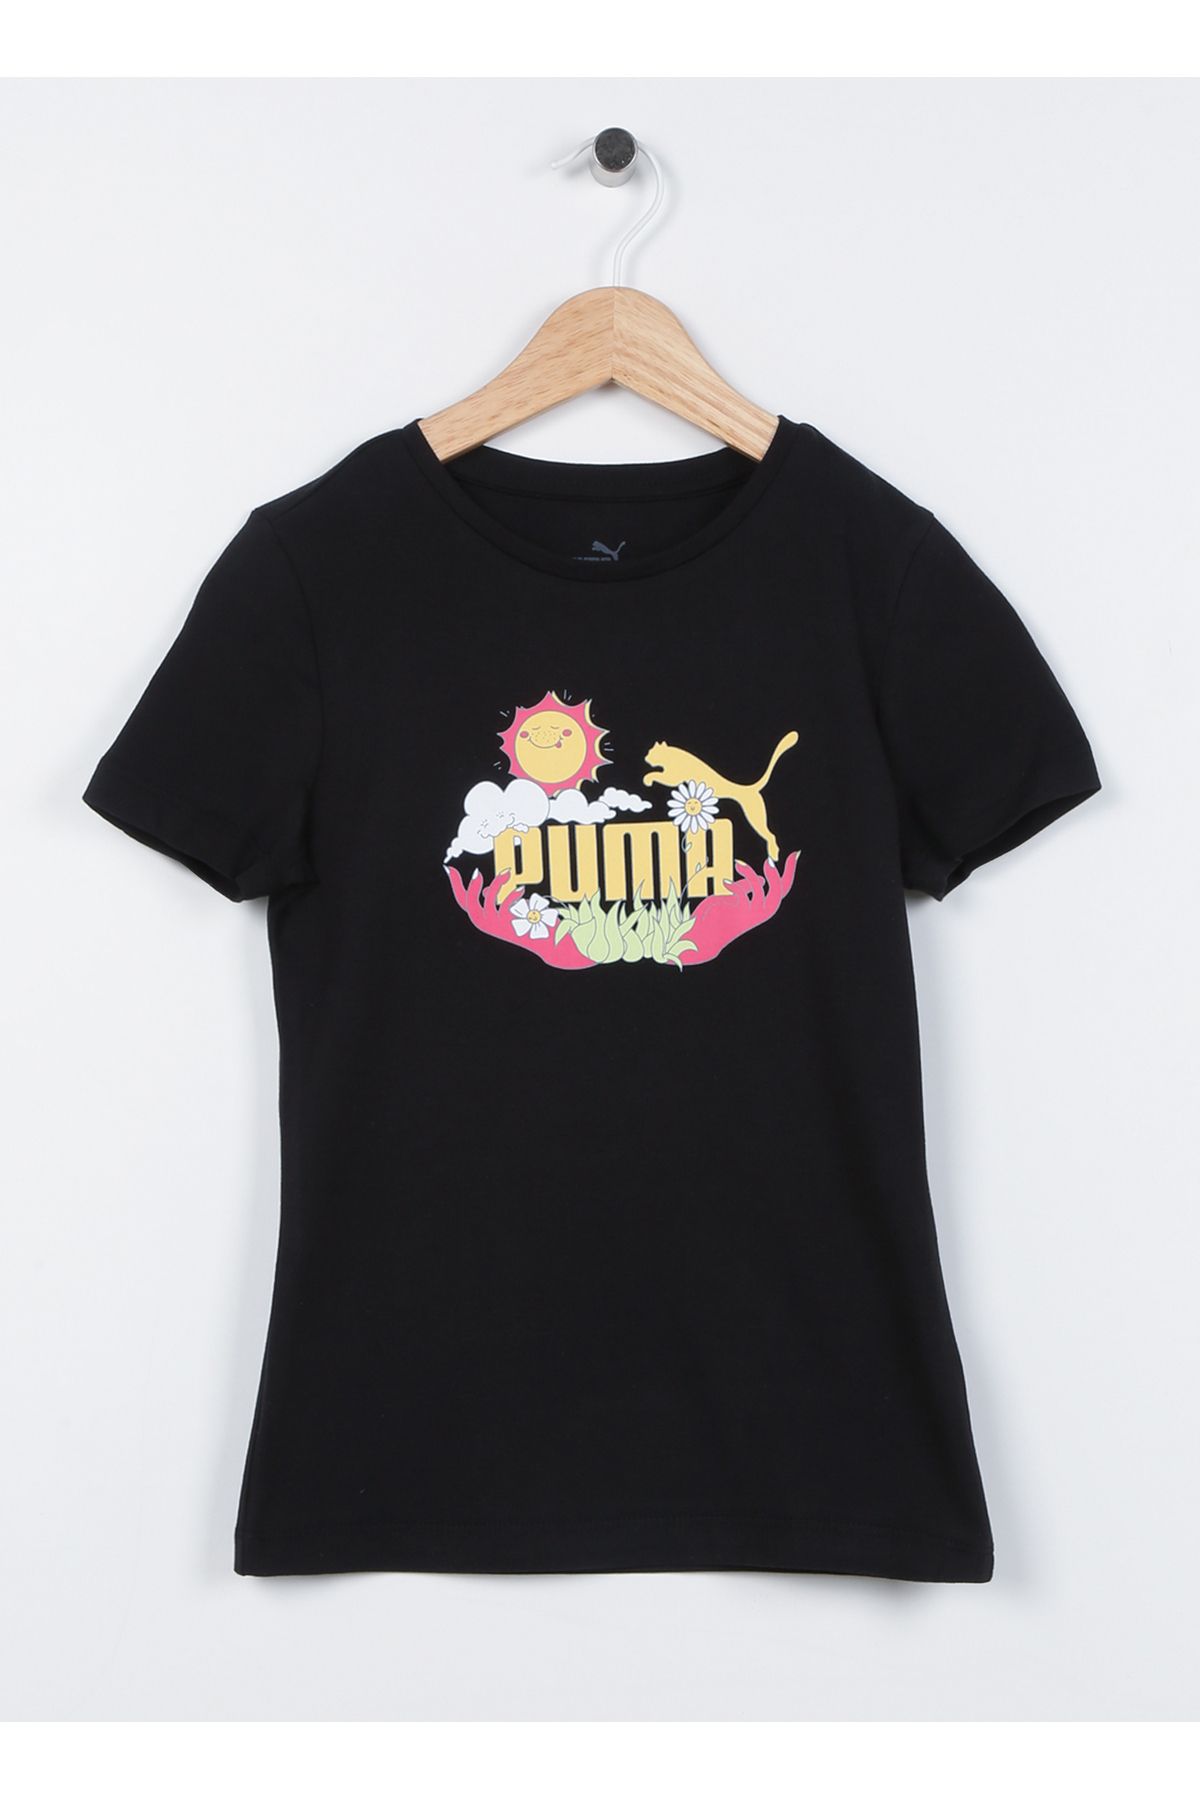 Puma Düz Siyah Kız Çocuk T-shirt 67996702 Girl S Tee